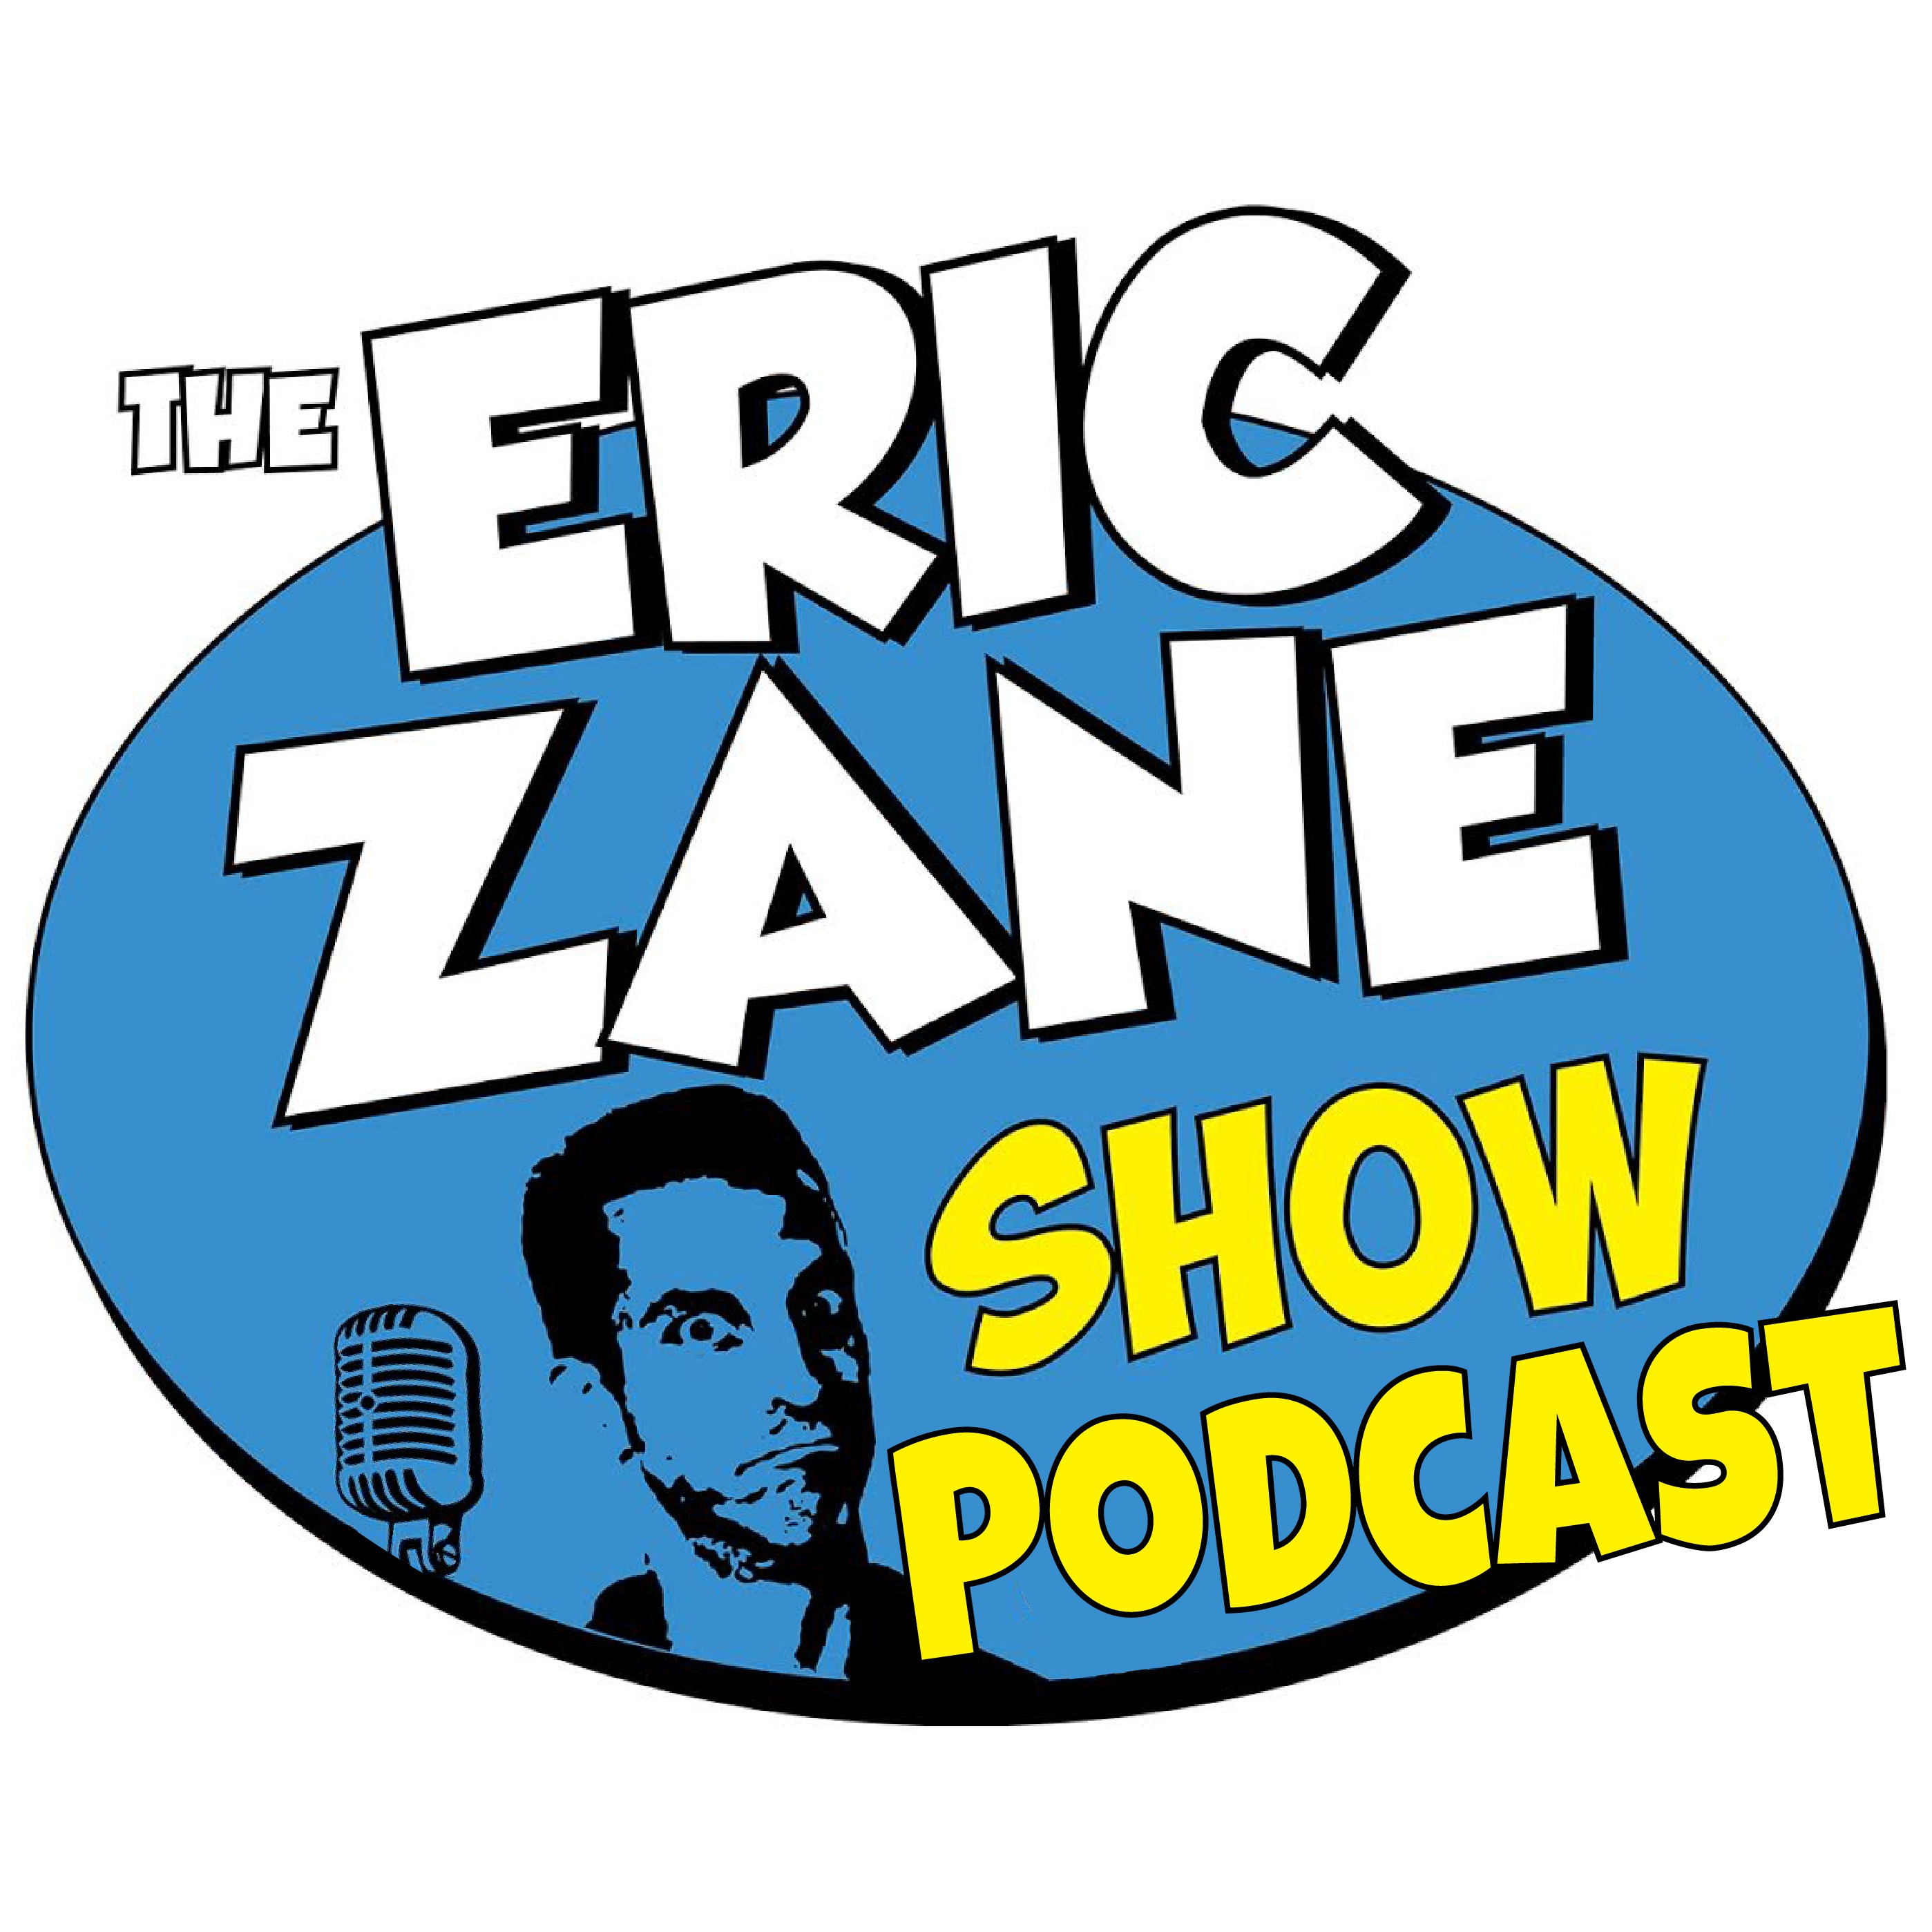 Eric Zane Show Podcast 793 Podcast school